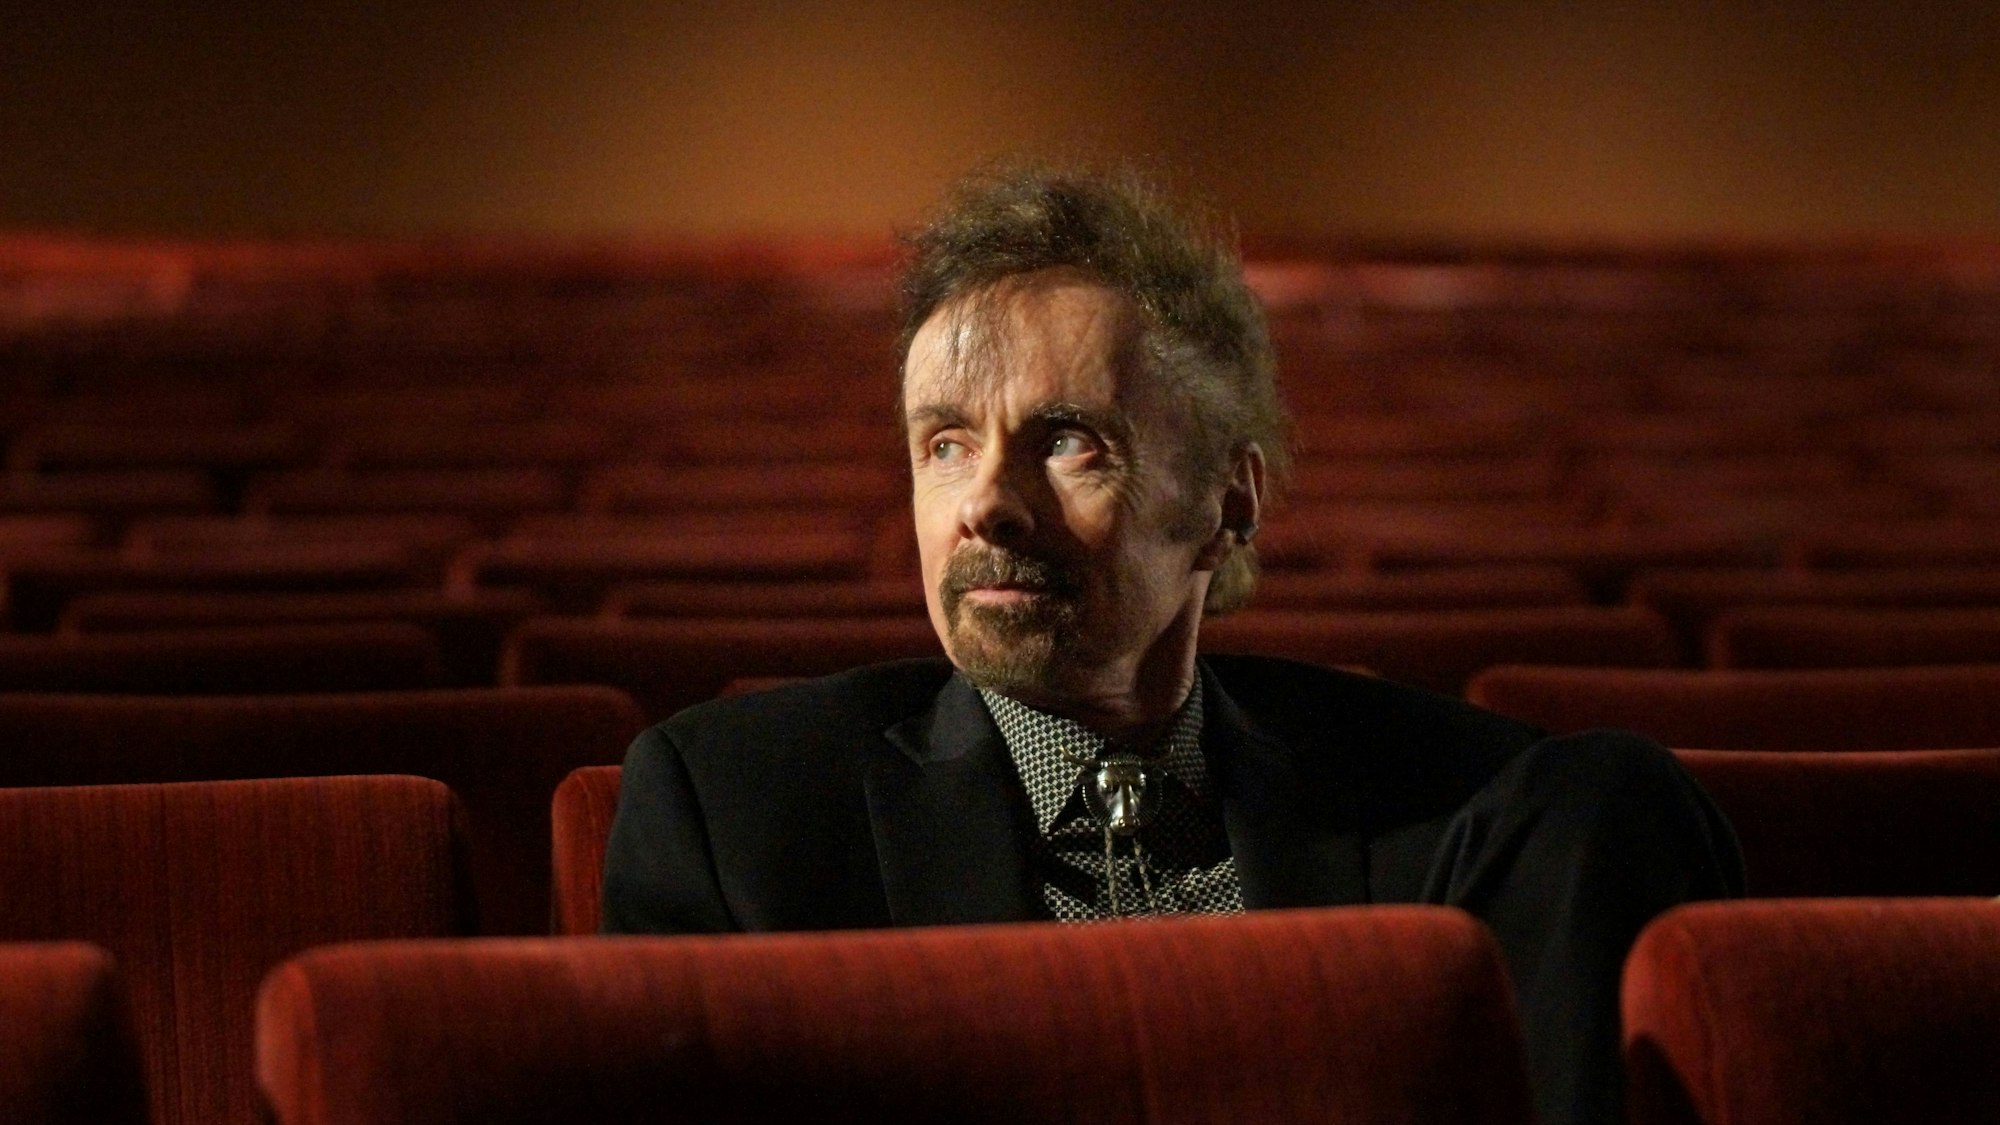 T. C. Boyle sitzt in einem Kinosaal mit roten Sesseln.